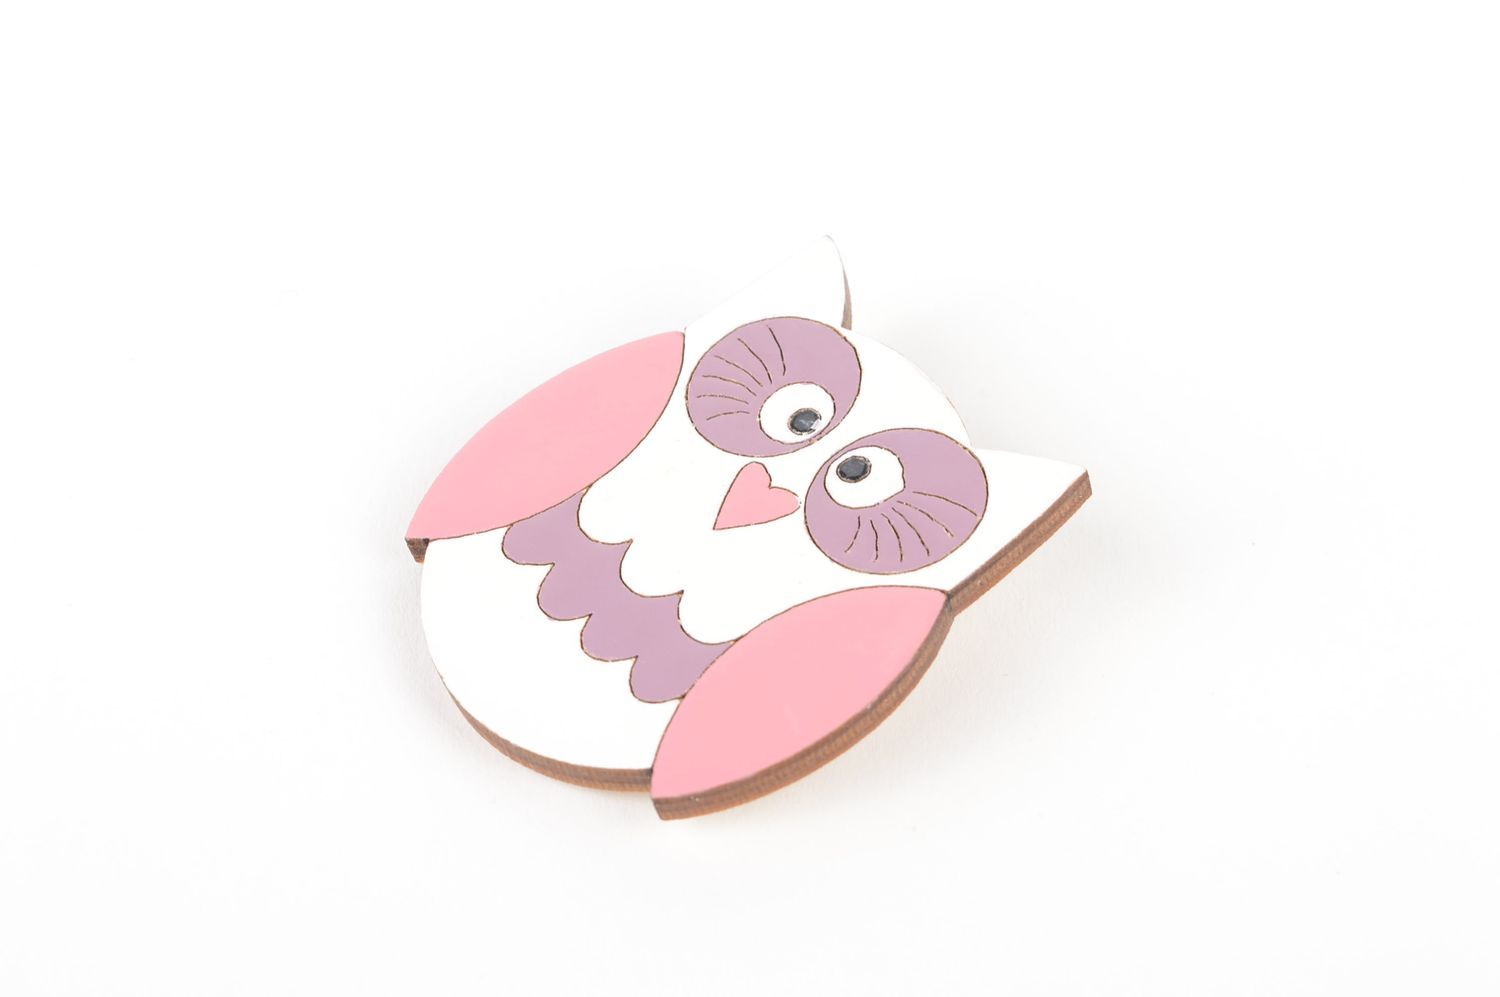 Handmade brooch made of wood cute owl brooch stylish winter jewelry gift photo 3